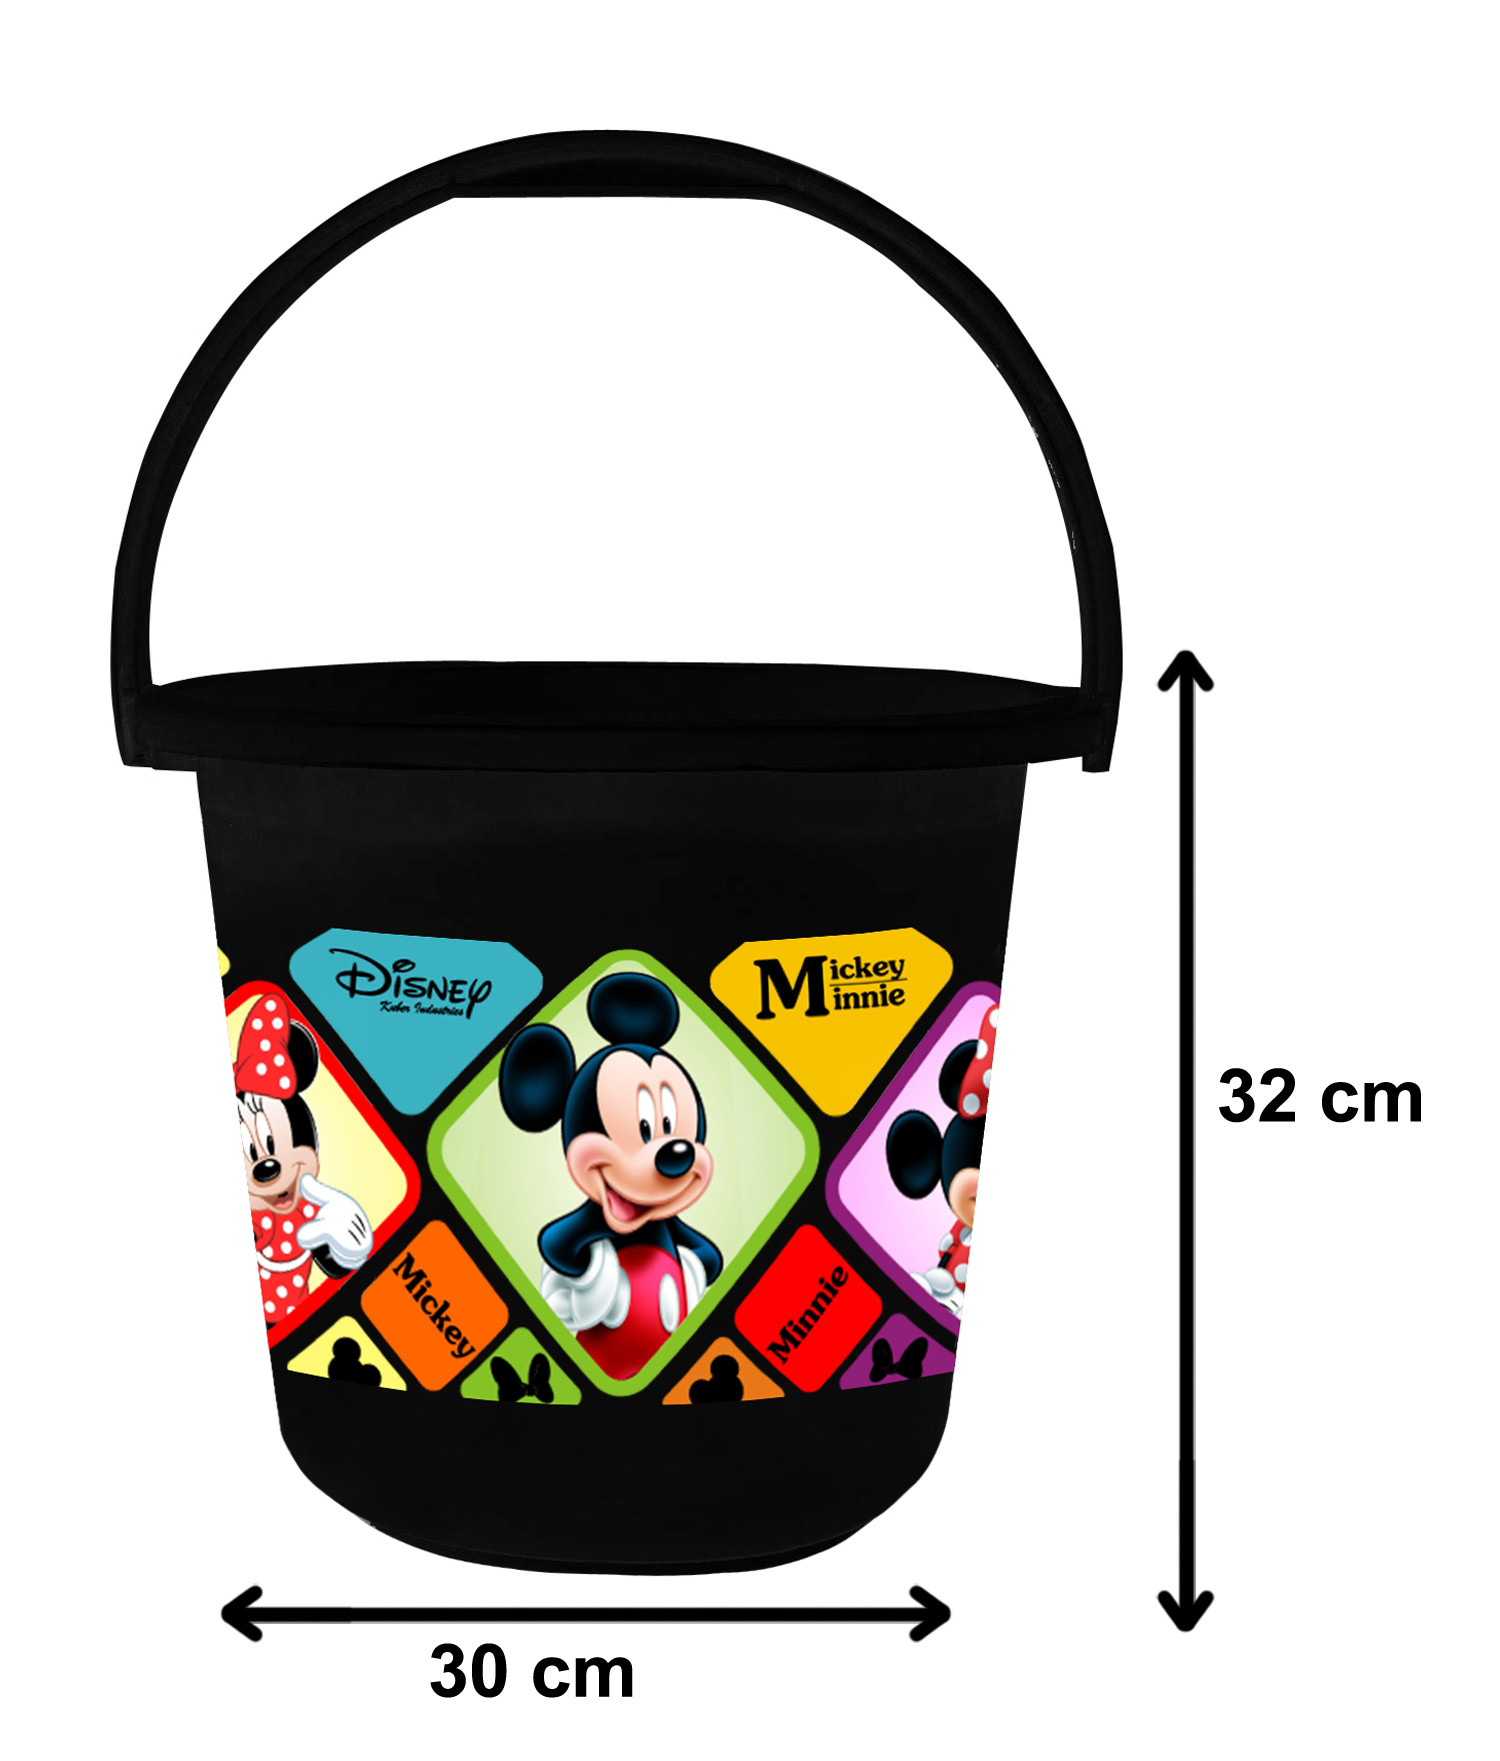 Kuber Industries Disney Mickey Minnie Print Unbreakable Virgin Plastic Strong Bathroom Bucket ,16 LTR (Black) -HS_35_KUBMART17835